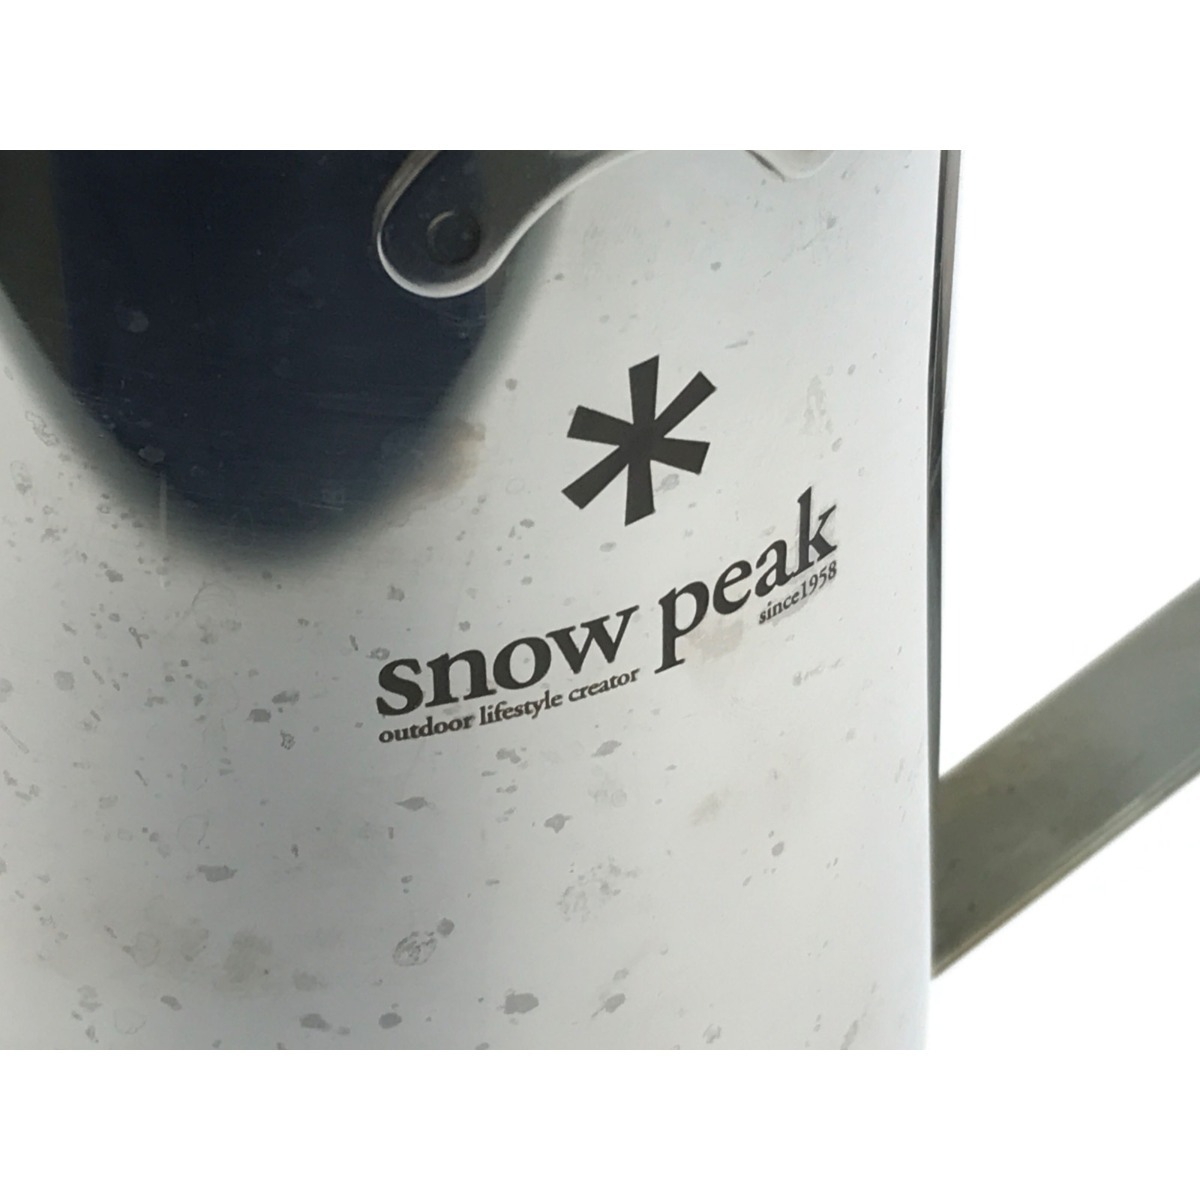 VV snowpeak Snow Peak Classic kettle 1.8 a little scratch . dirt equipped 